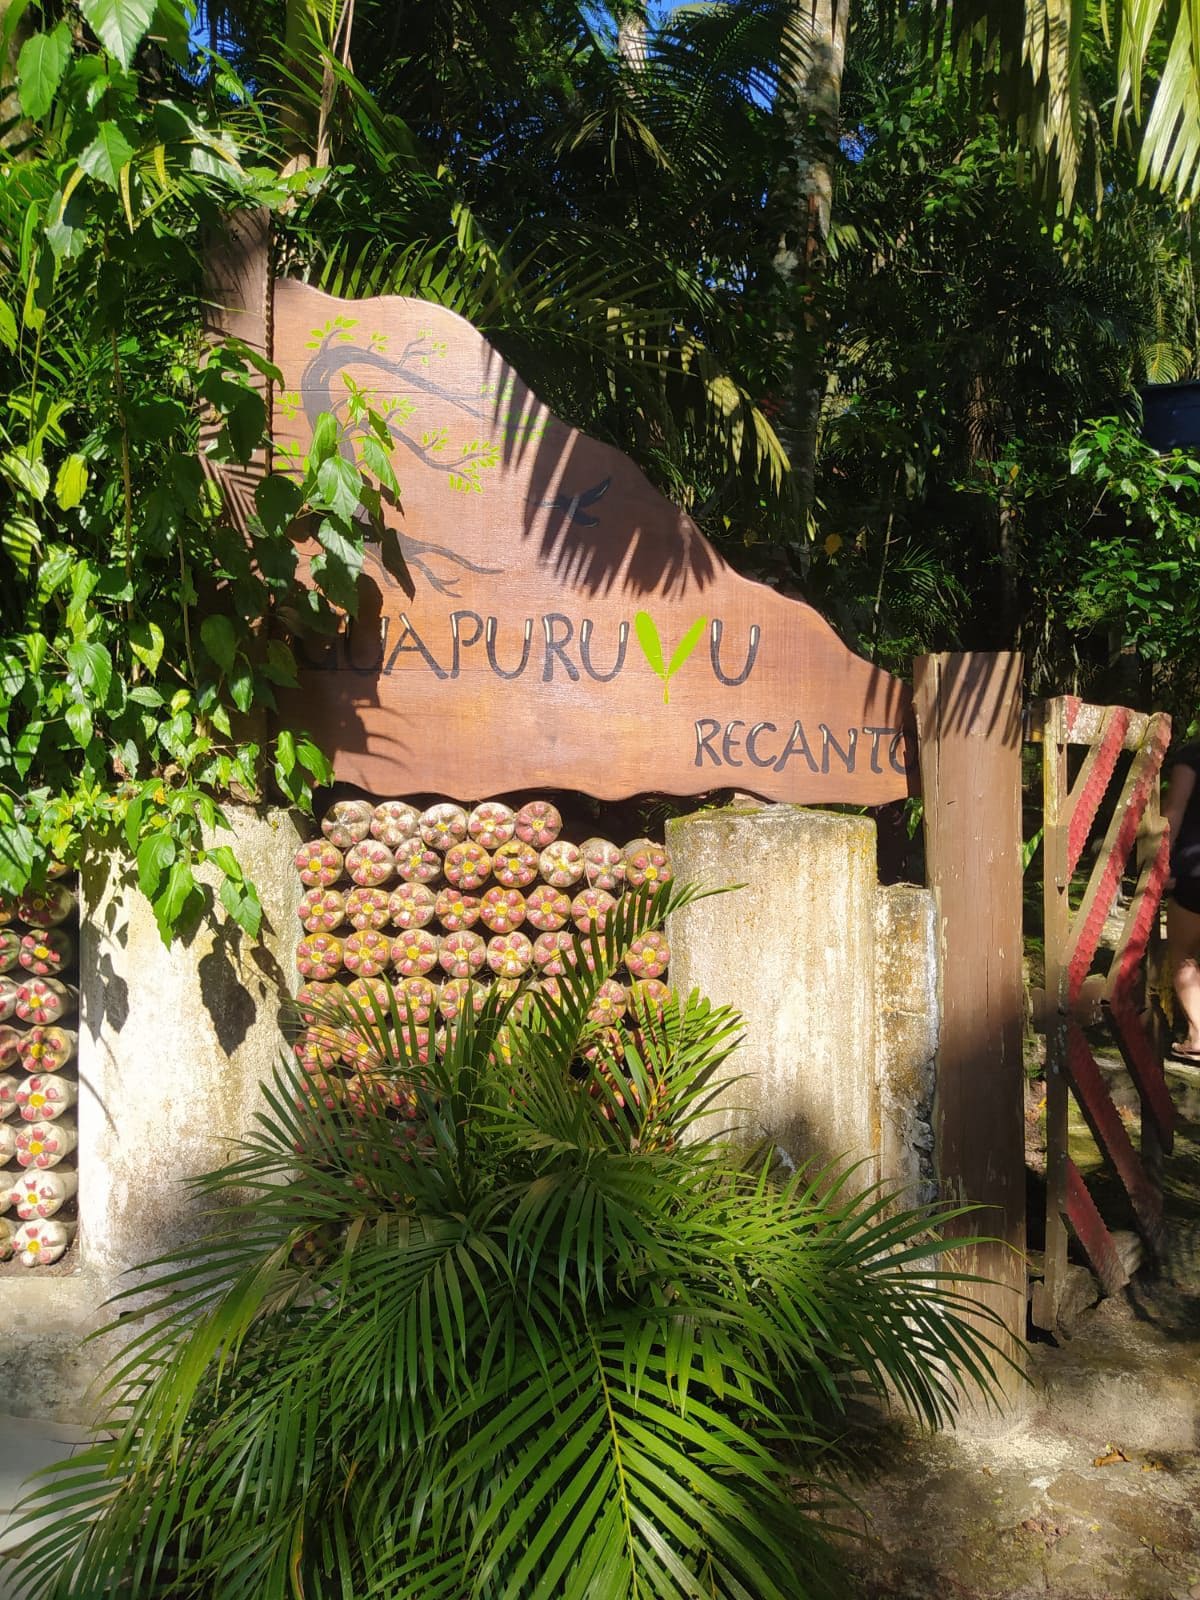 Guapuruvu Ilha do Mel -共用浴室